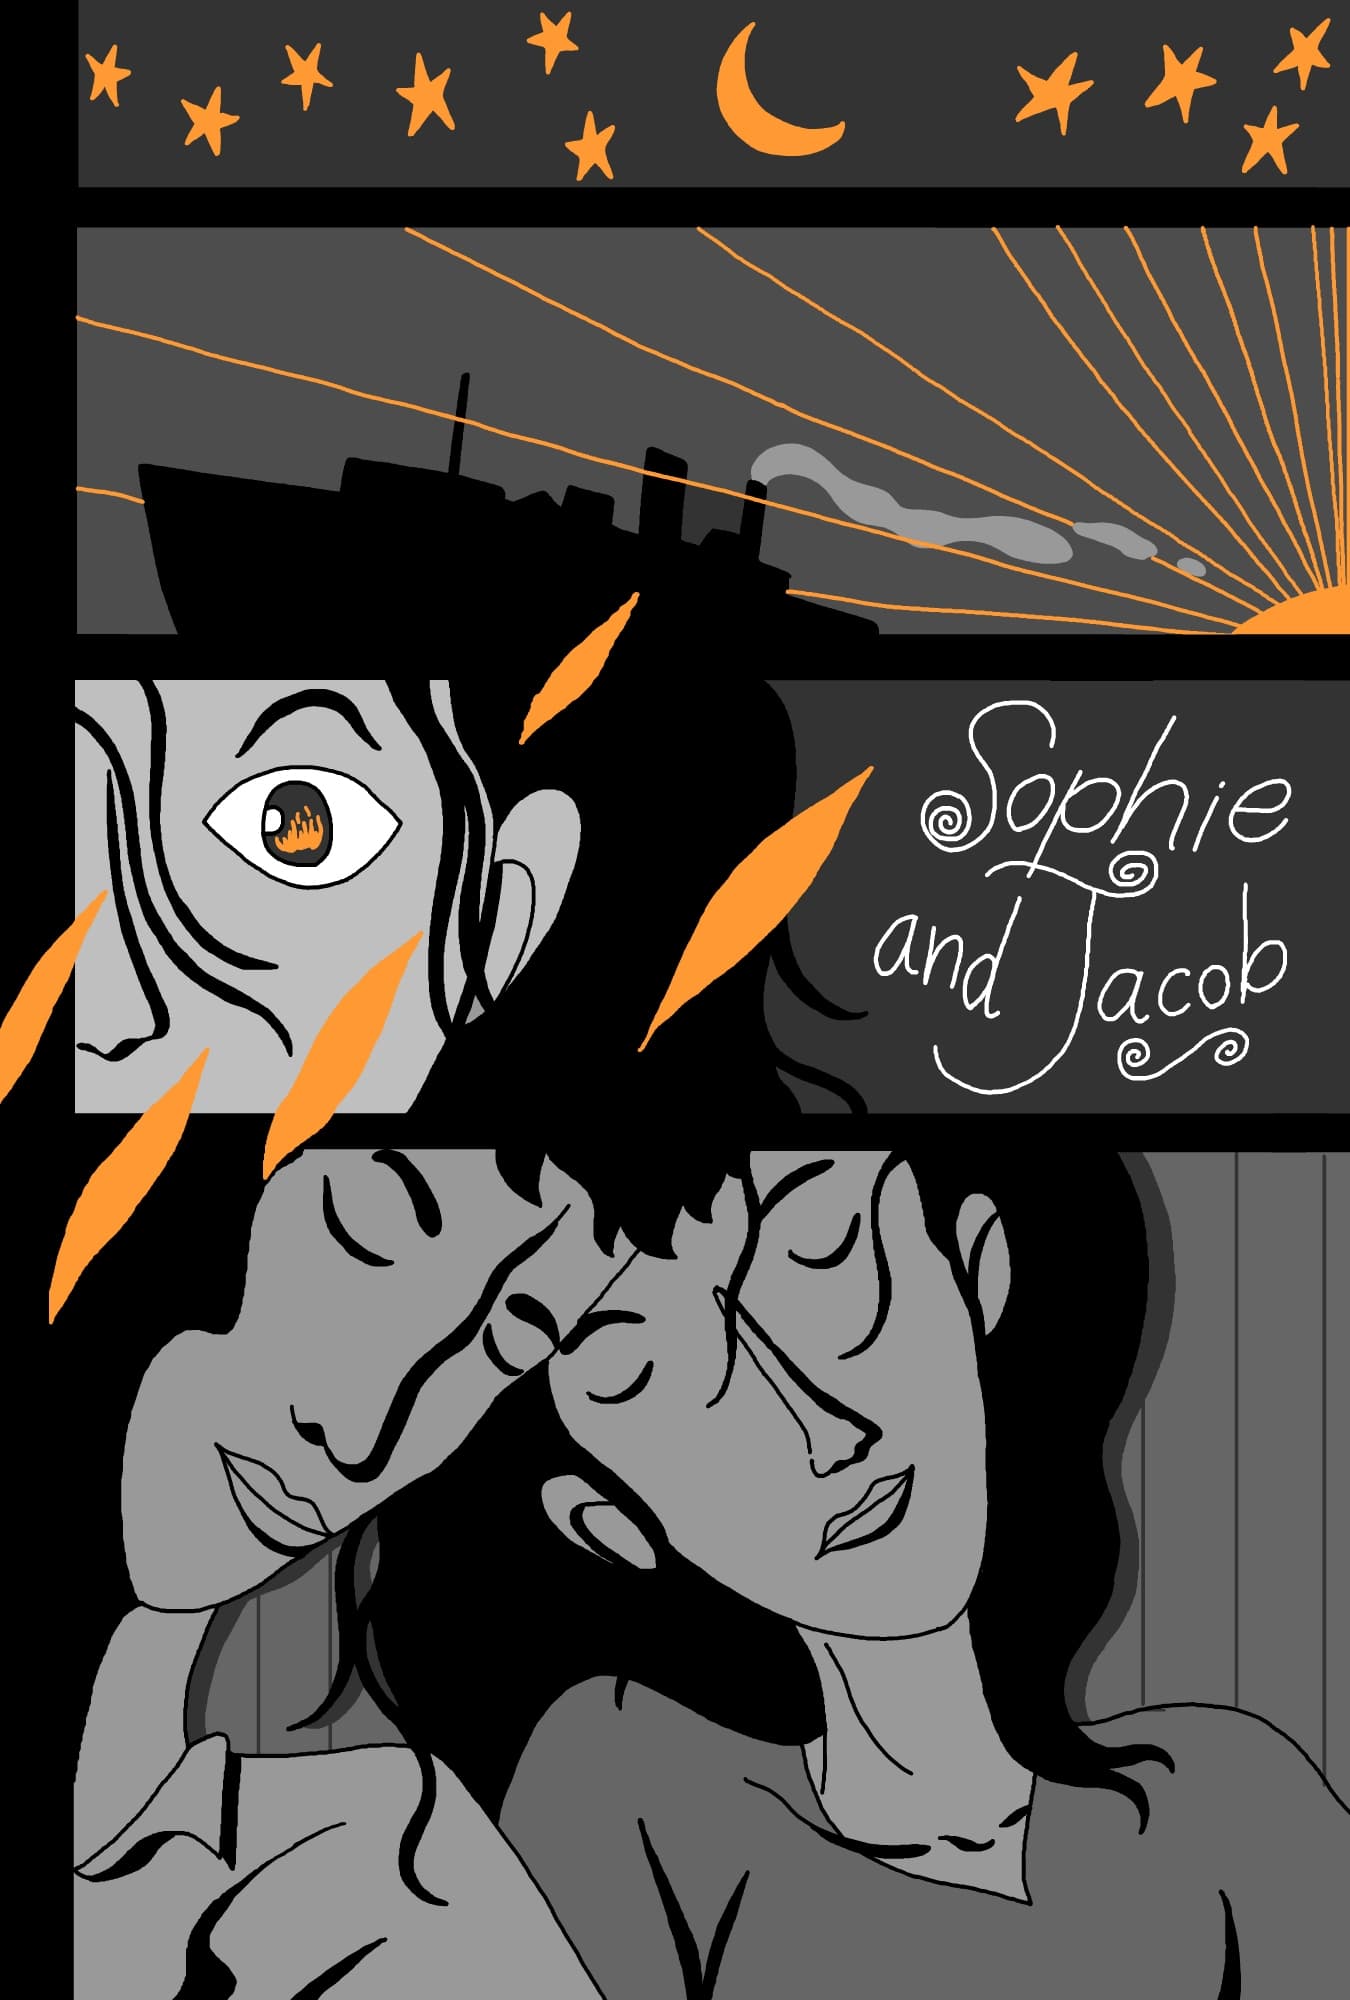 Sophie & Jacob